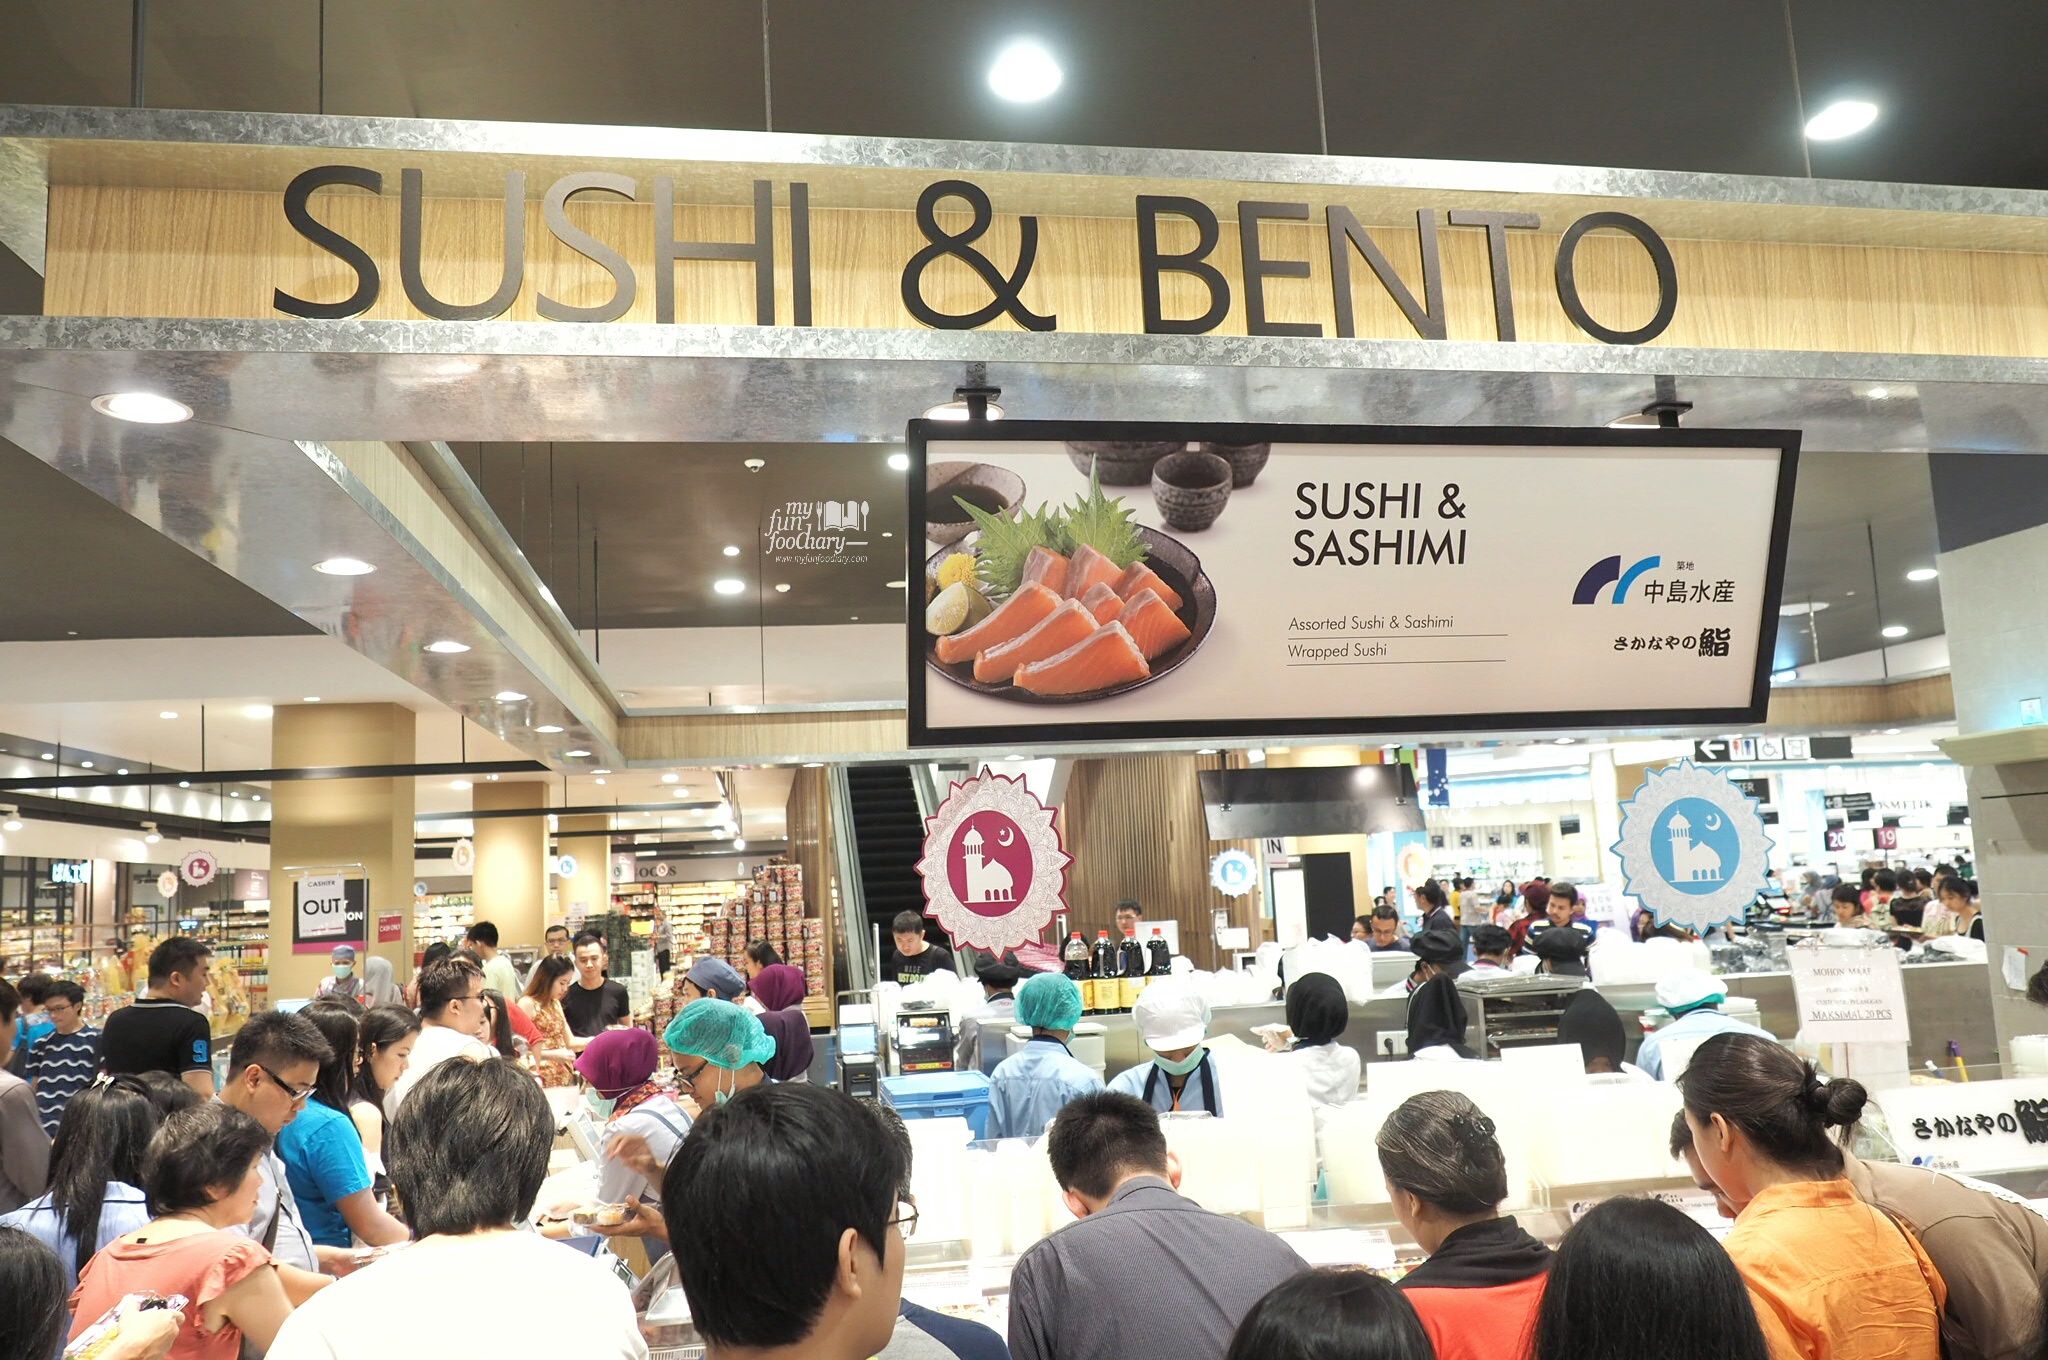 Sushi and Sashimi at Sushi and Bento Counter AEON Mall by Myfunfoodiary